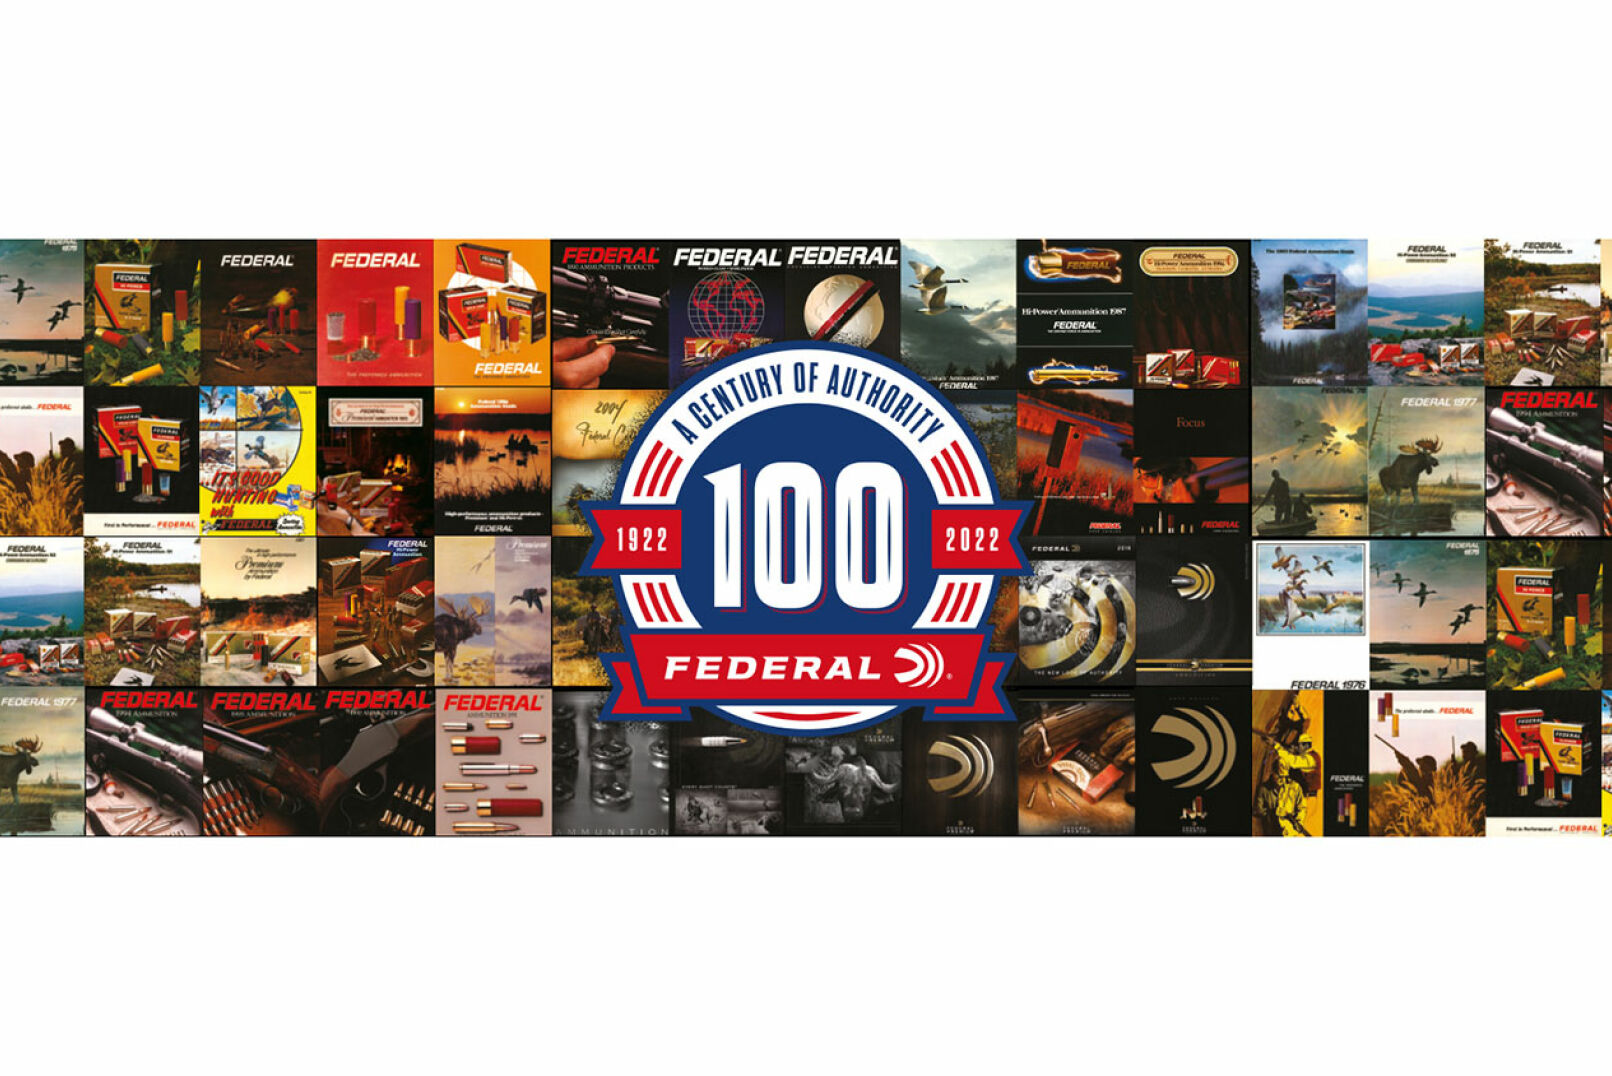 Federal Banner - Federal Banner. - © GTML Global Trading Marketing Logistics GmbH